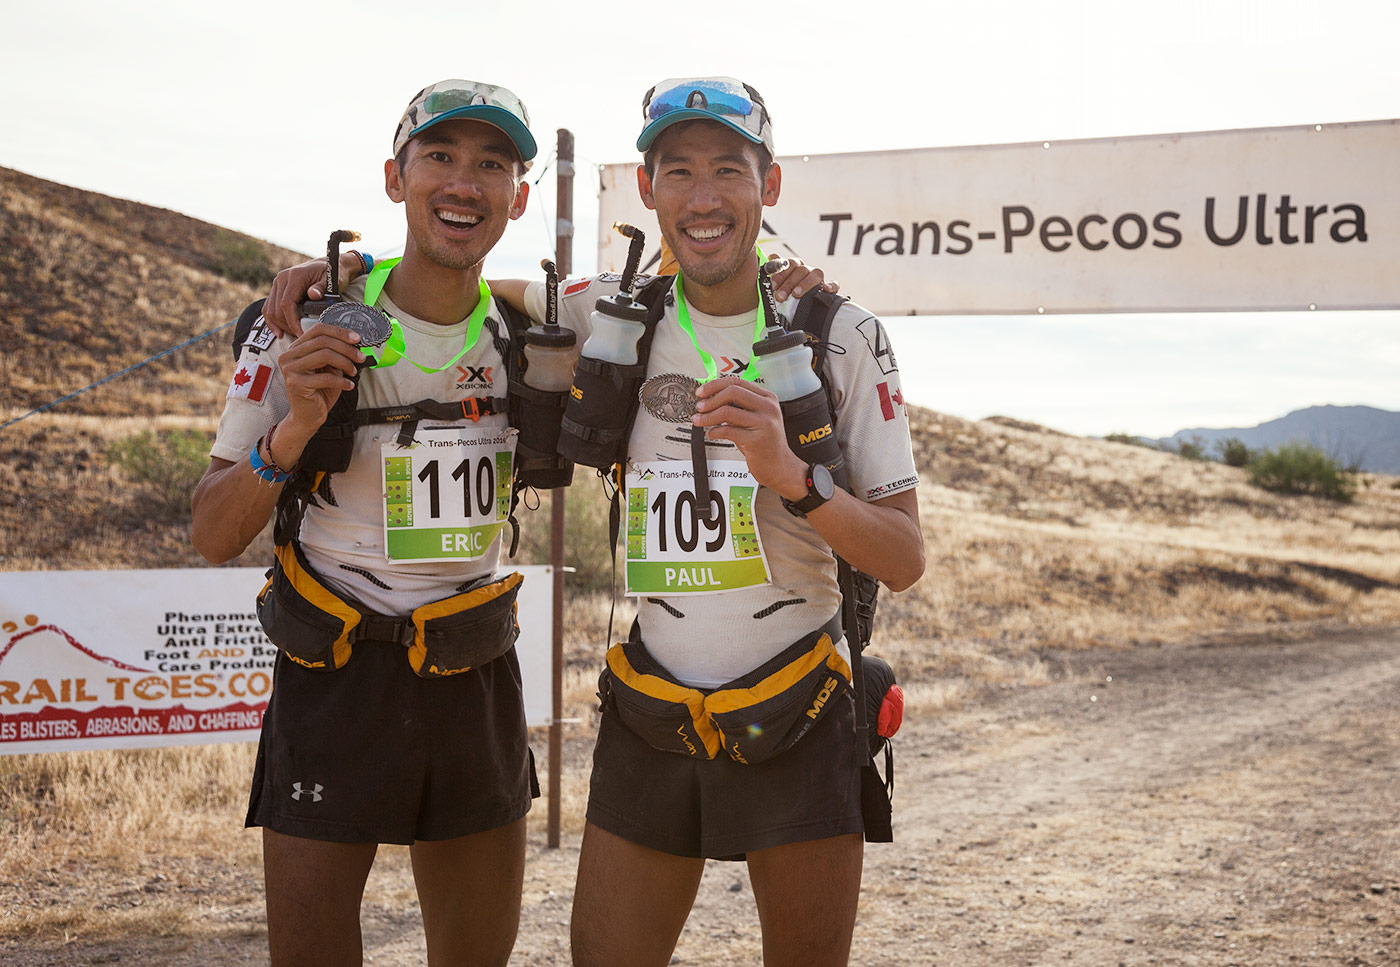 Trans-Pecos-Ultra-ABP-Chan-Brothers.jpg